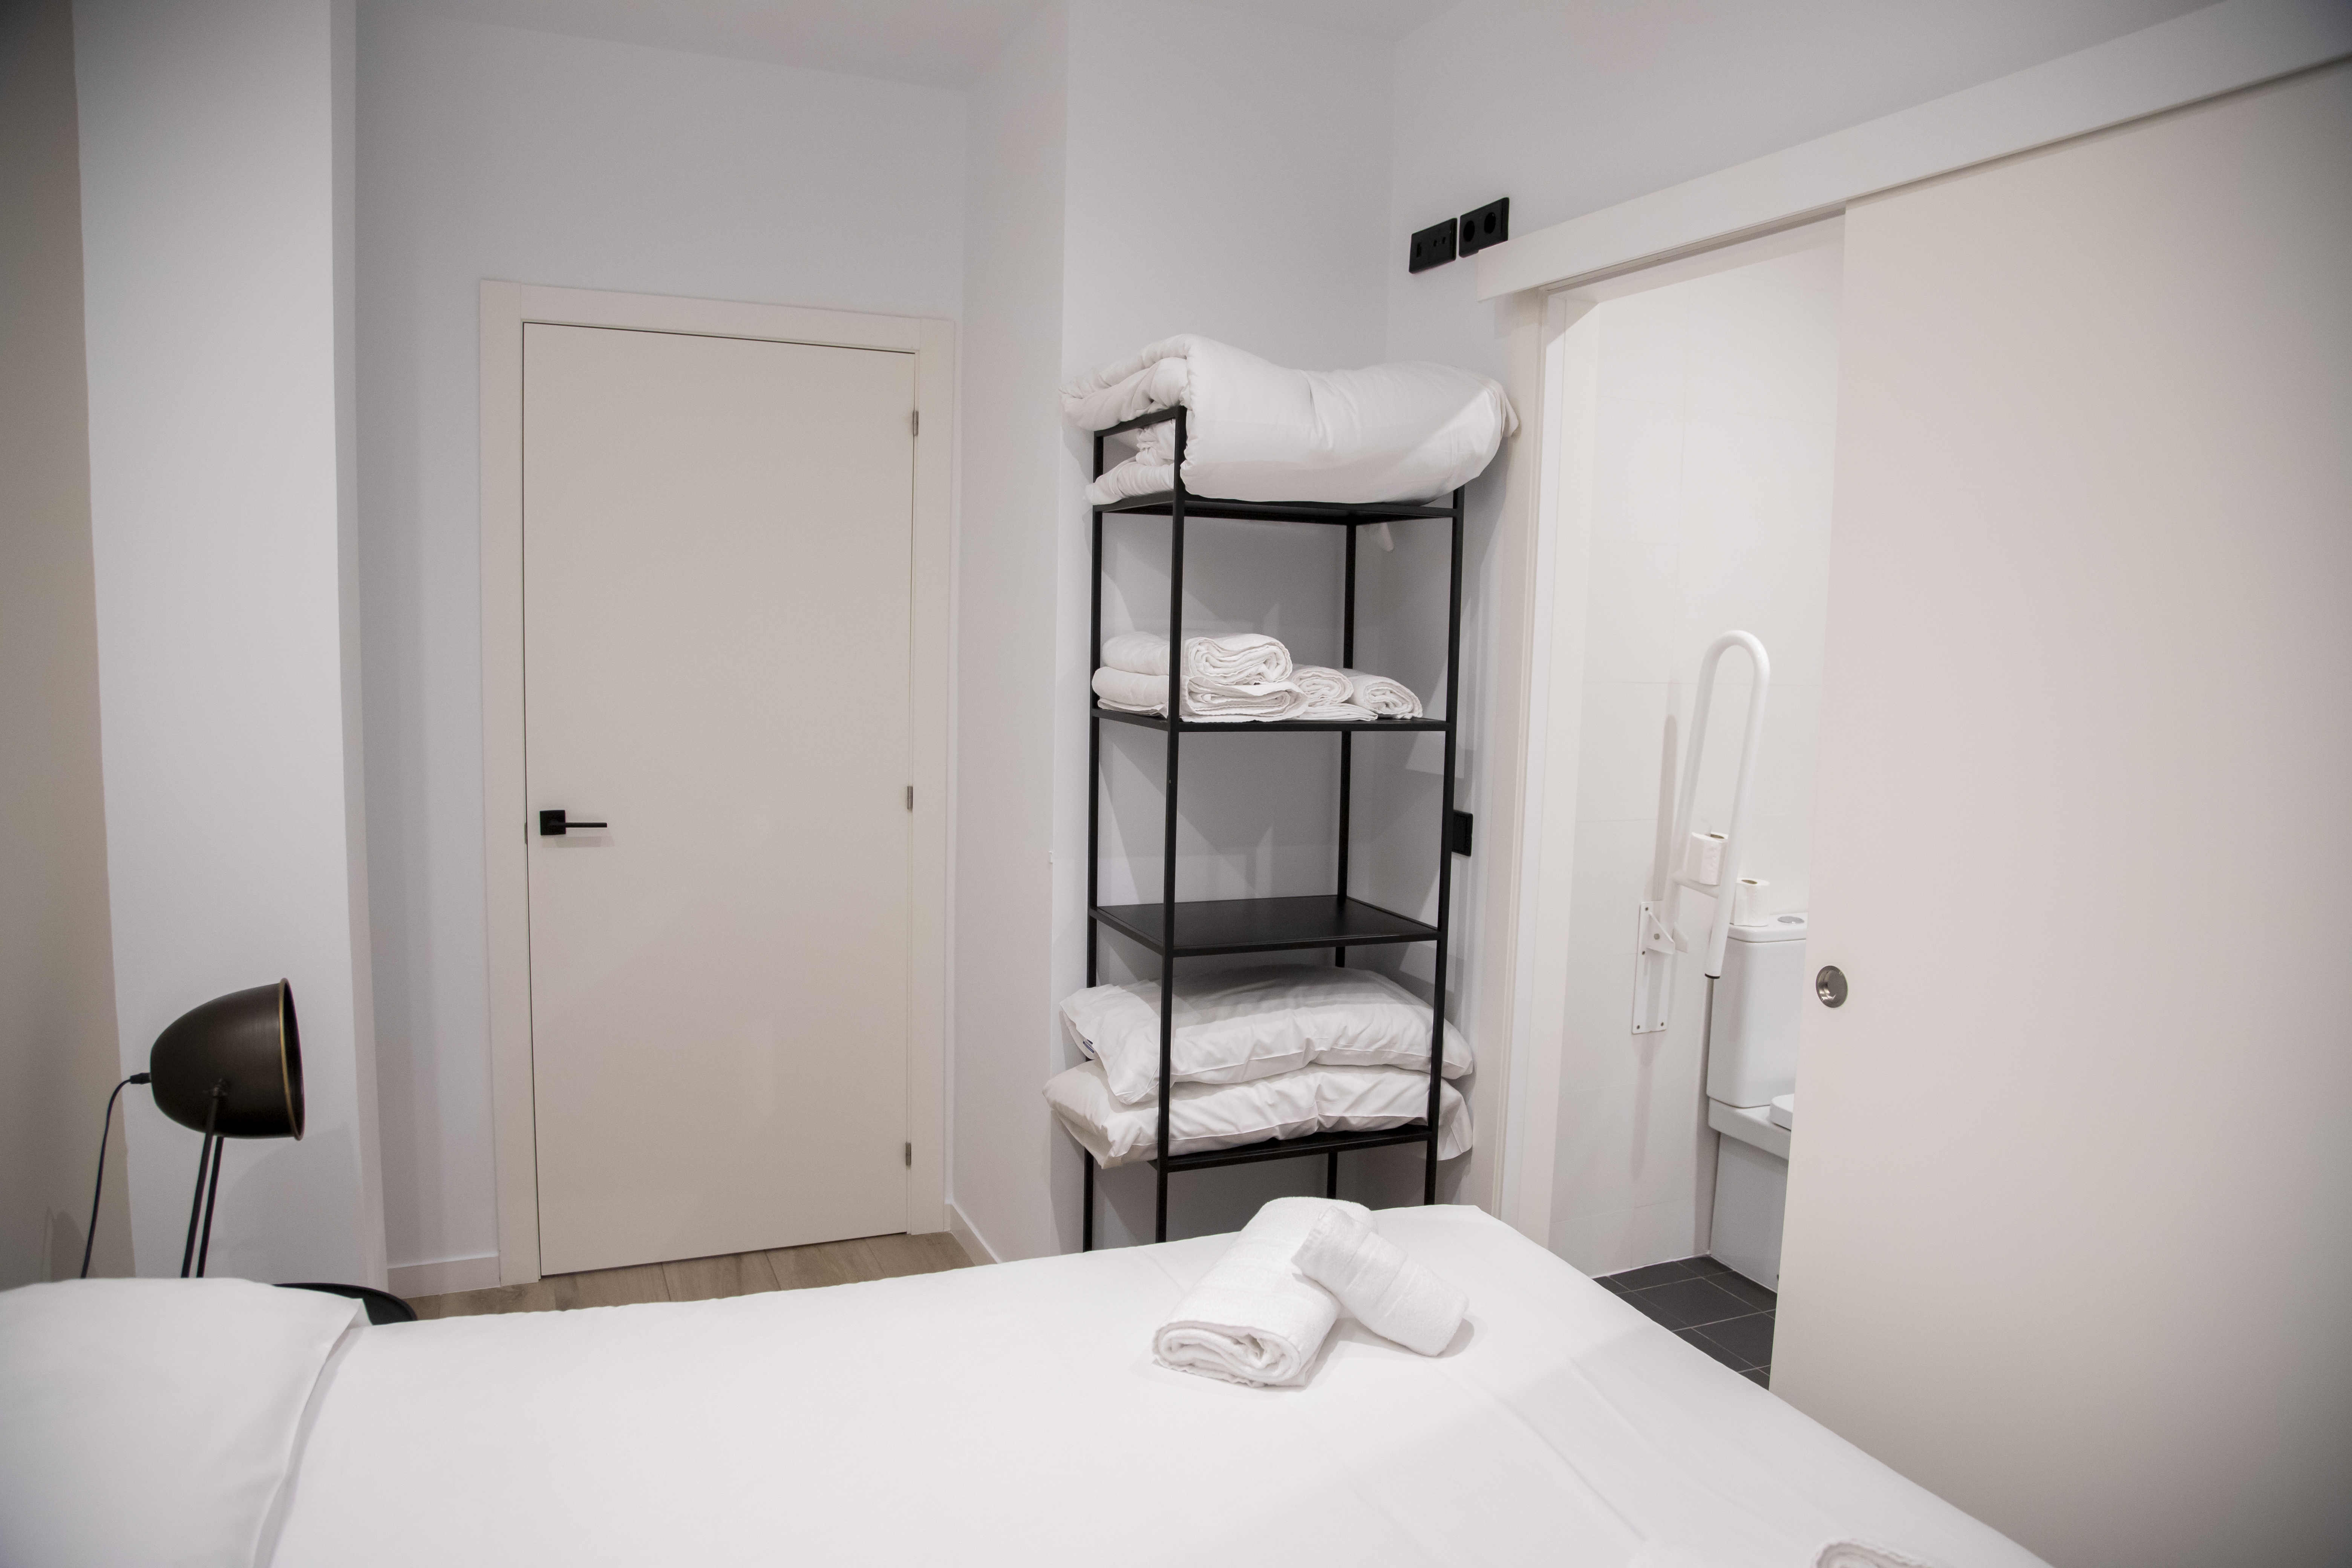 2T one bedroom apartment in the heart of the city 54 VLC HOST: Alquiler apartamentos corta duración